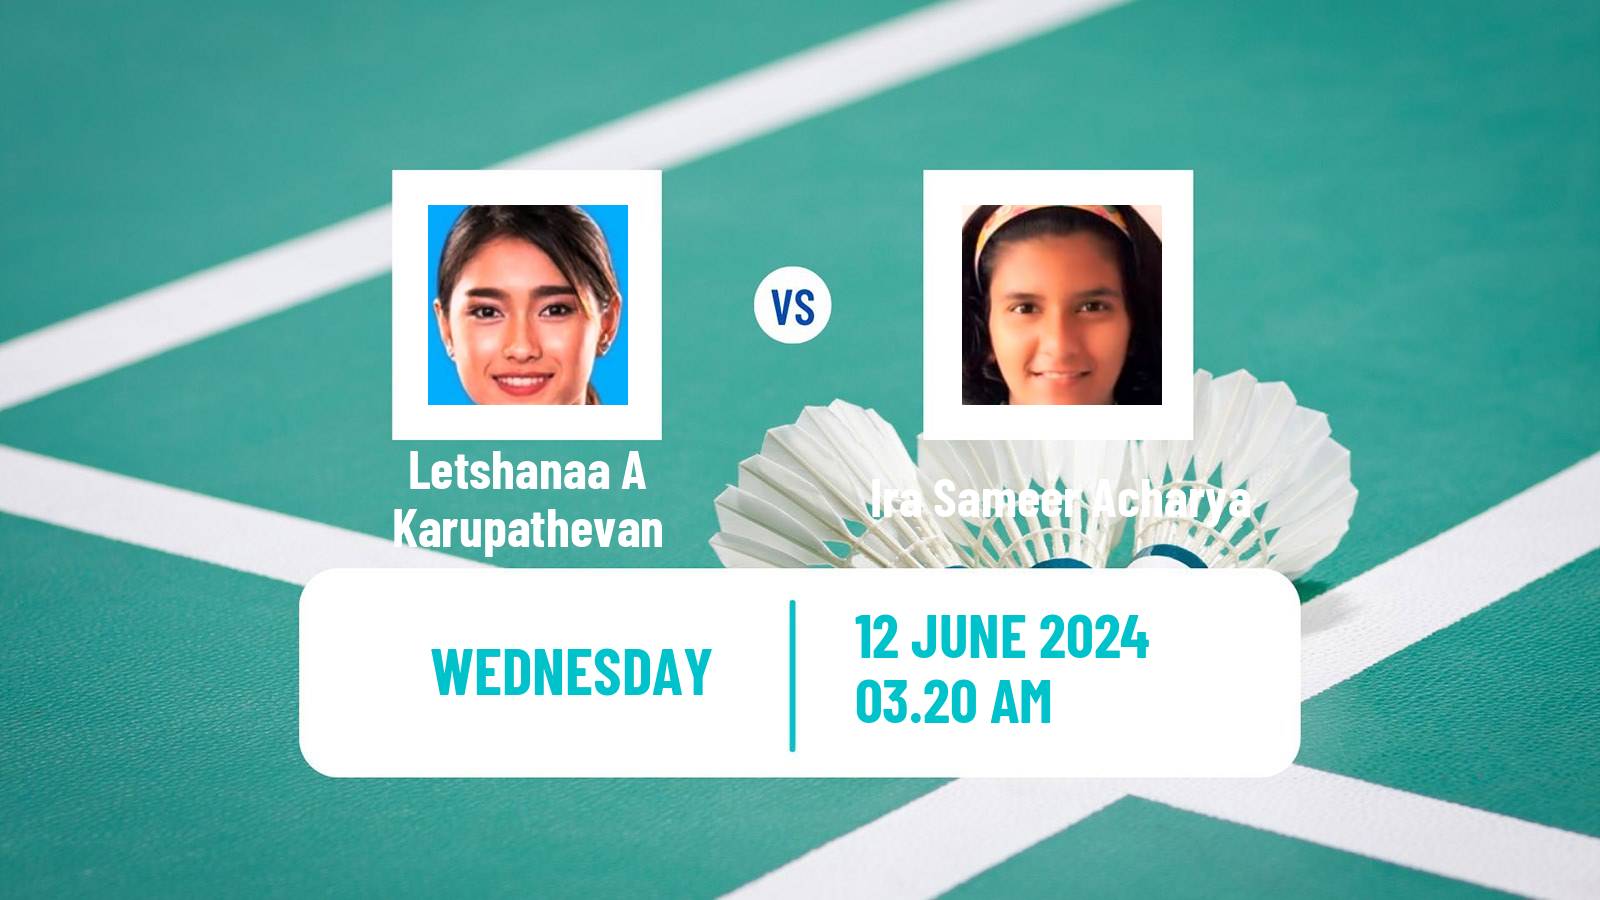 Badminton BWF World Tour Australian Open Women Letshanaa A Karupathevan - Ira Sameer Acharya